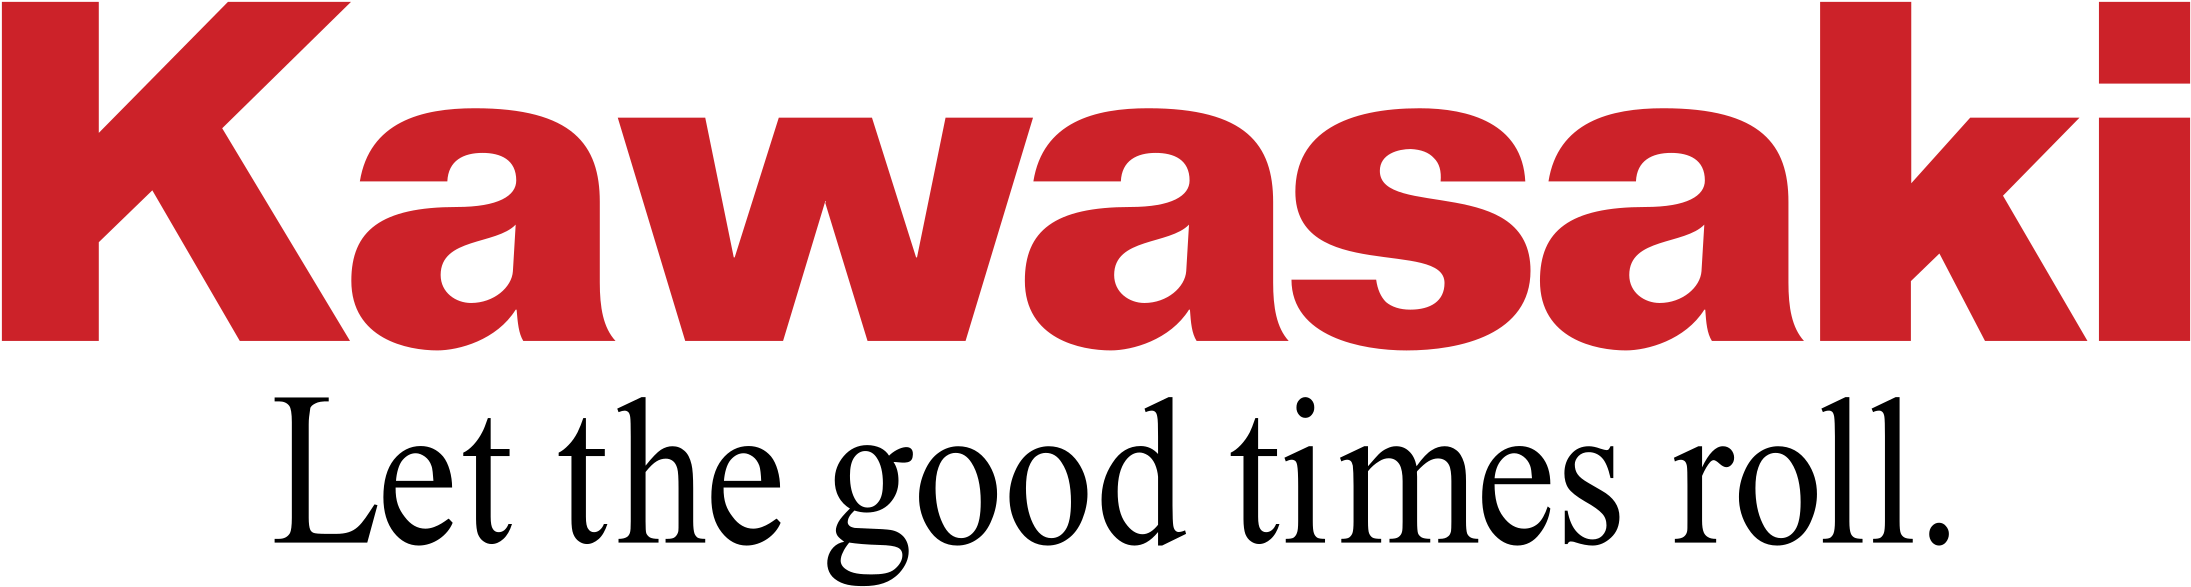 Kawasaki Logo iPhone Wallpapers - Wallpaper Cave